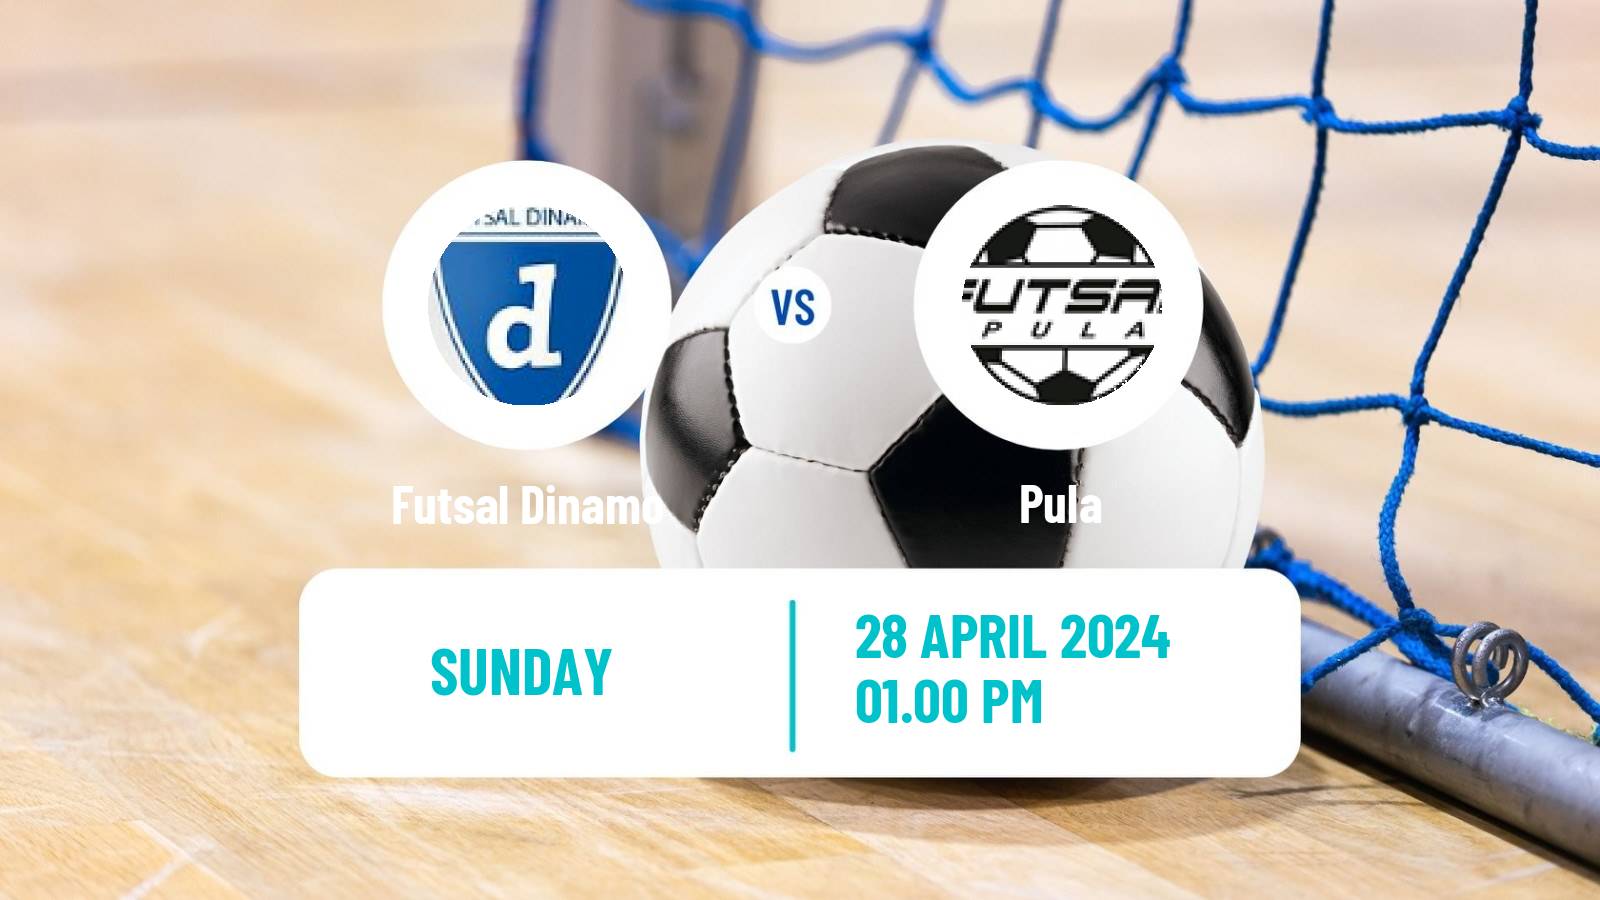 Futsal Croatian 1 HMNL Futsal Dinamo - Pula